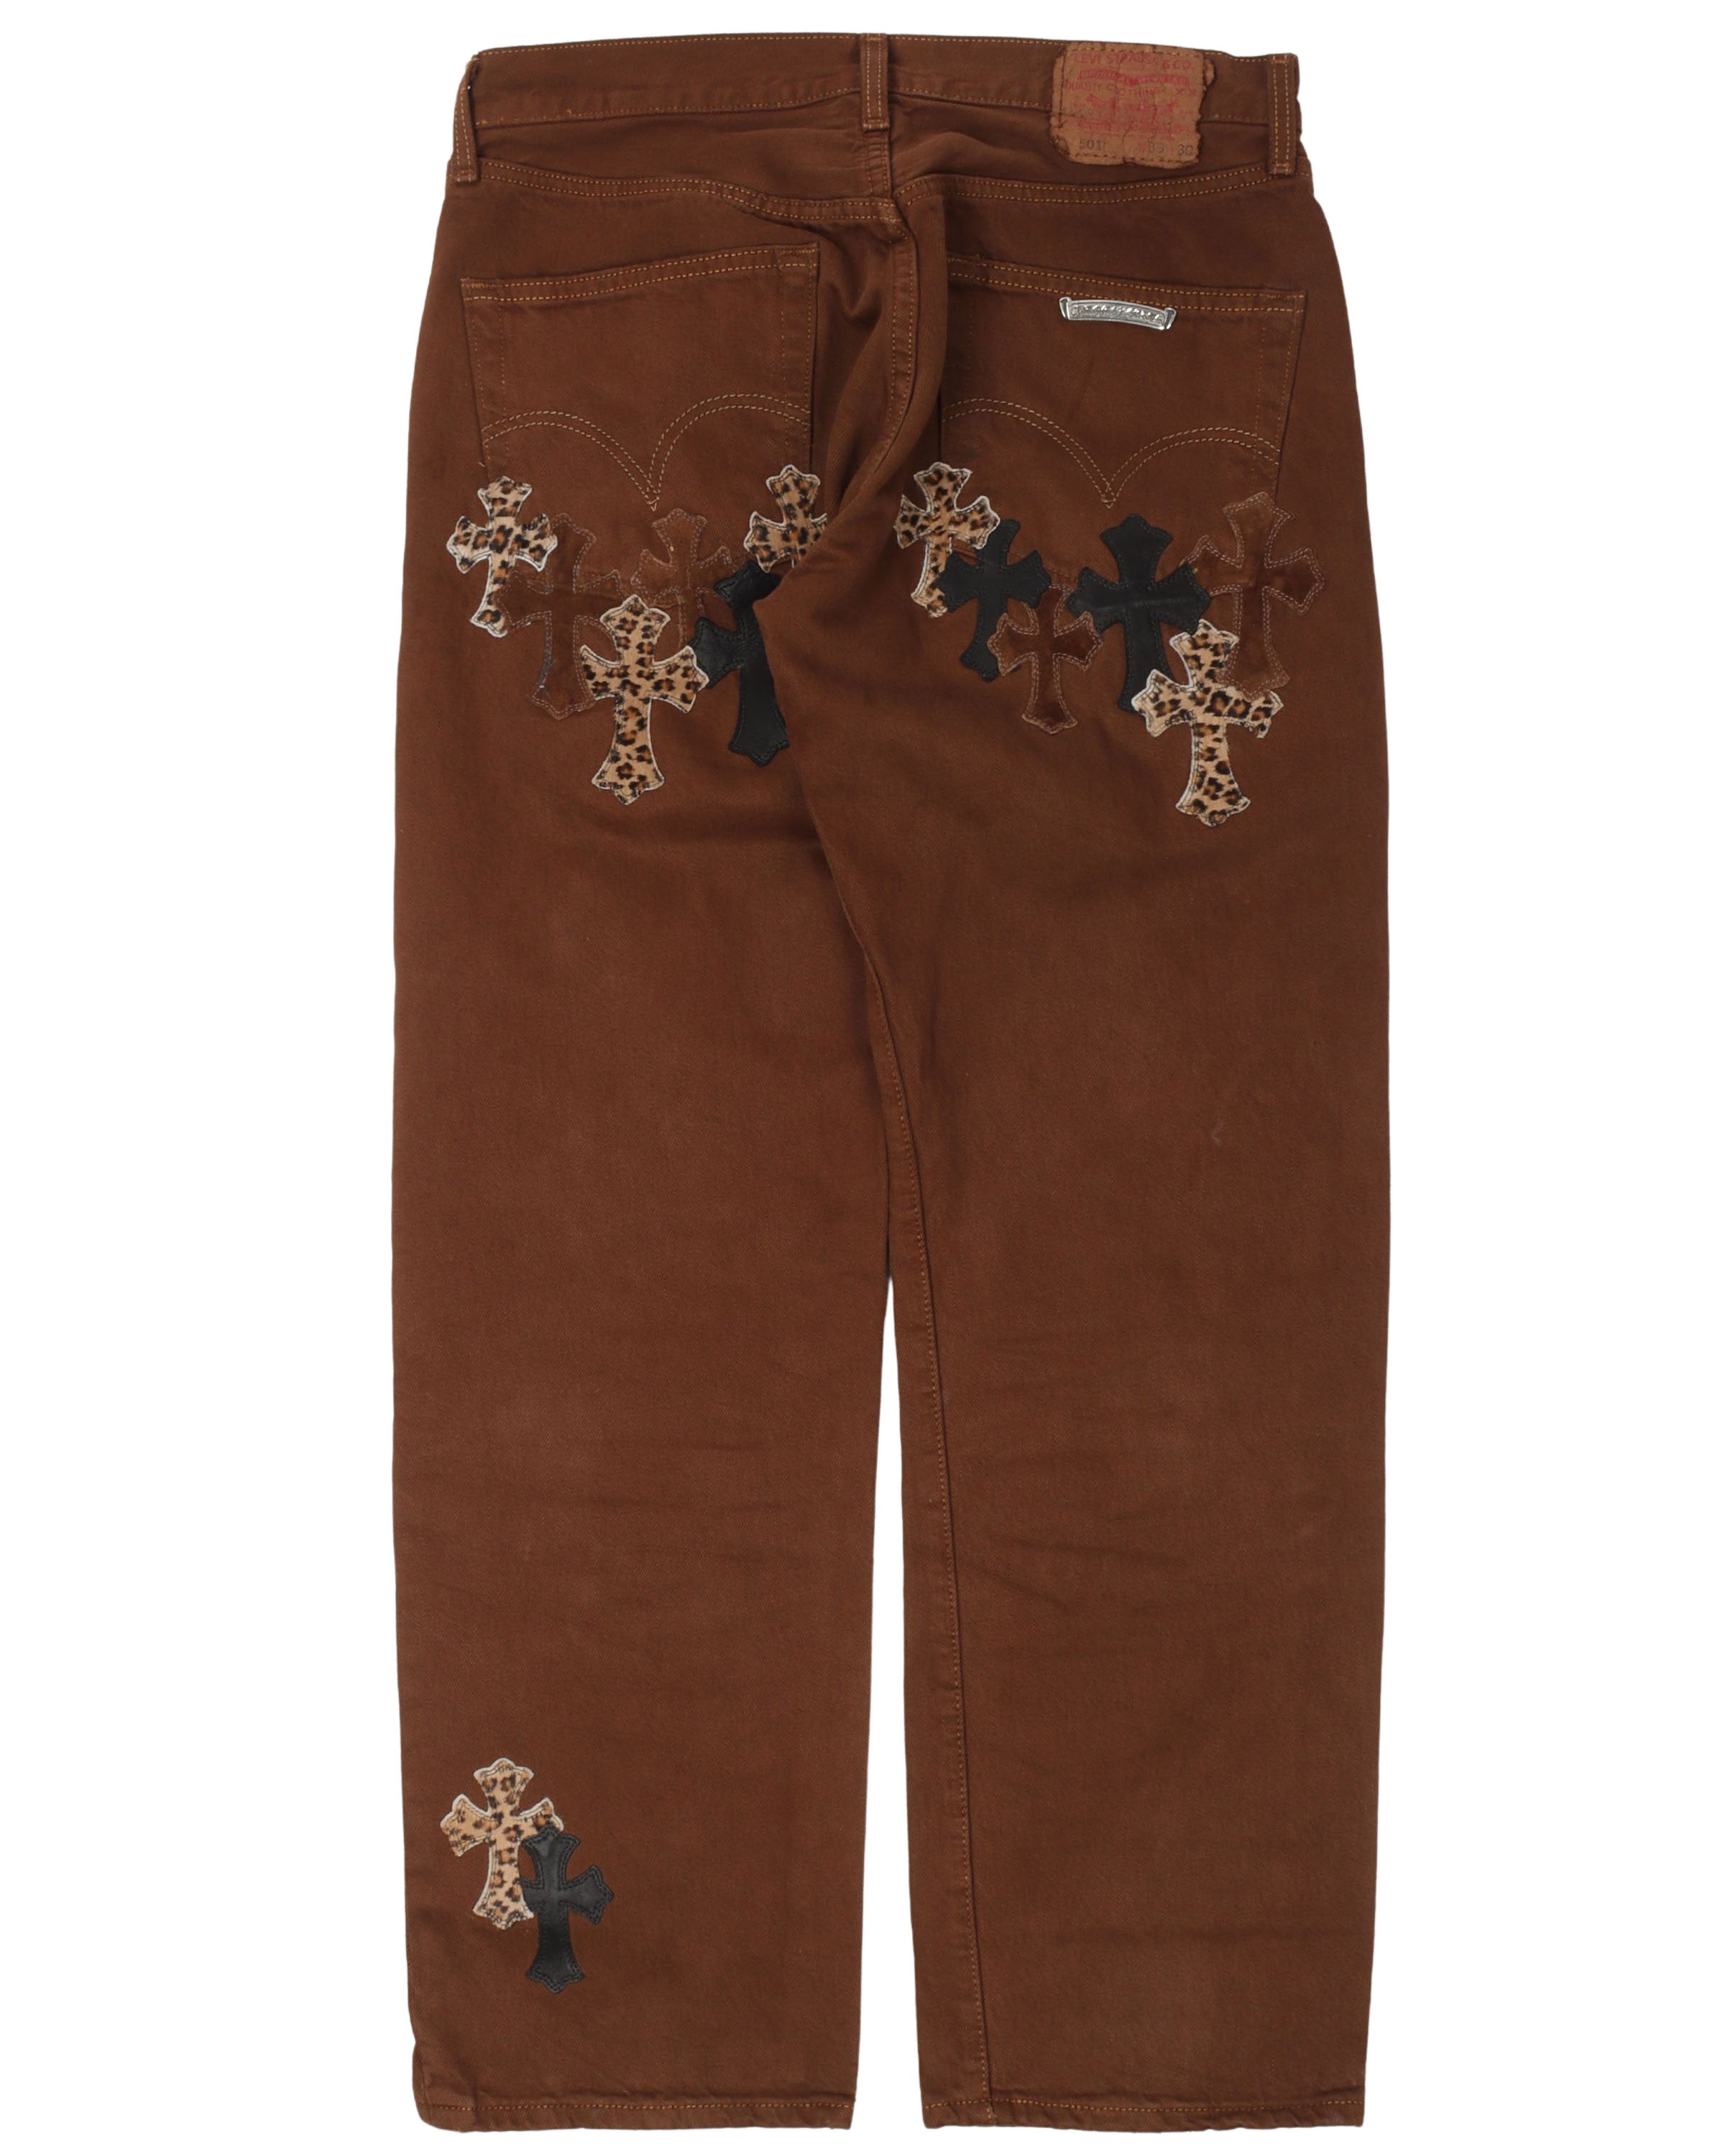 NYFW Leopard Levi's Cross Patch Jeans